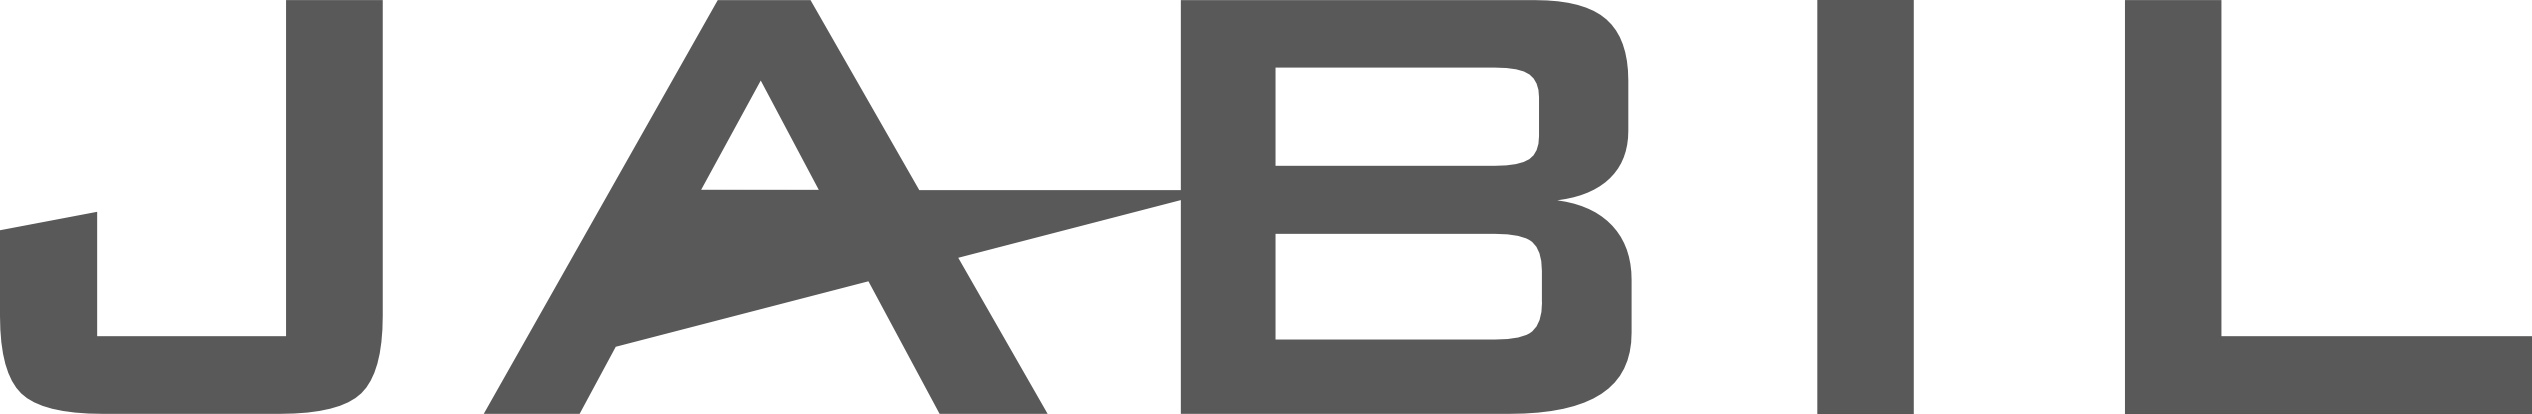 jabil logo blk